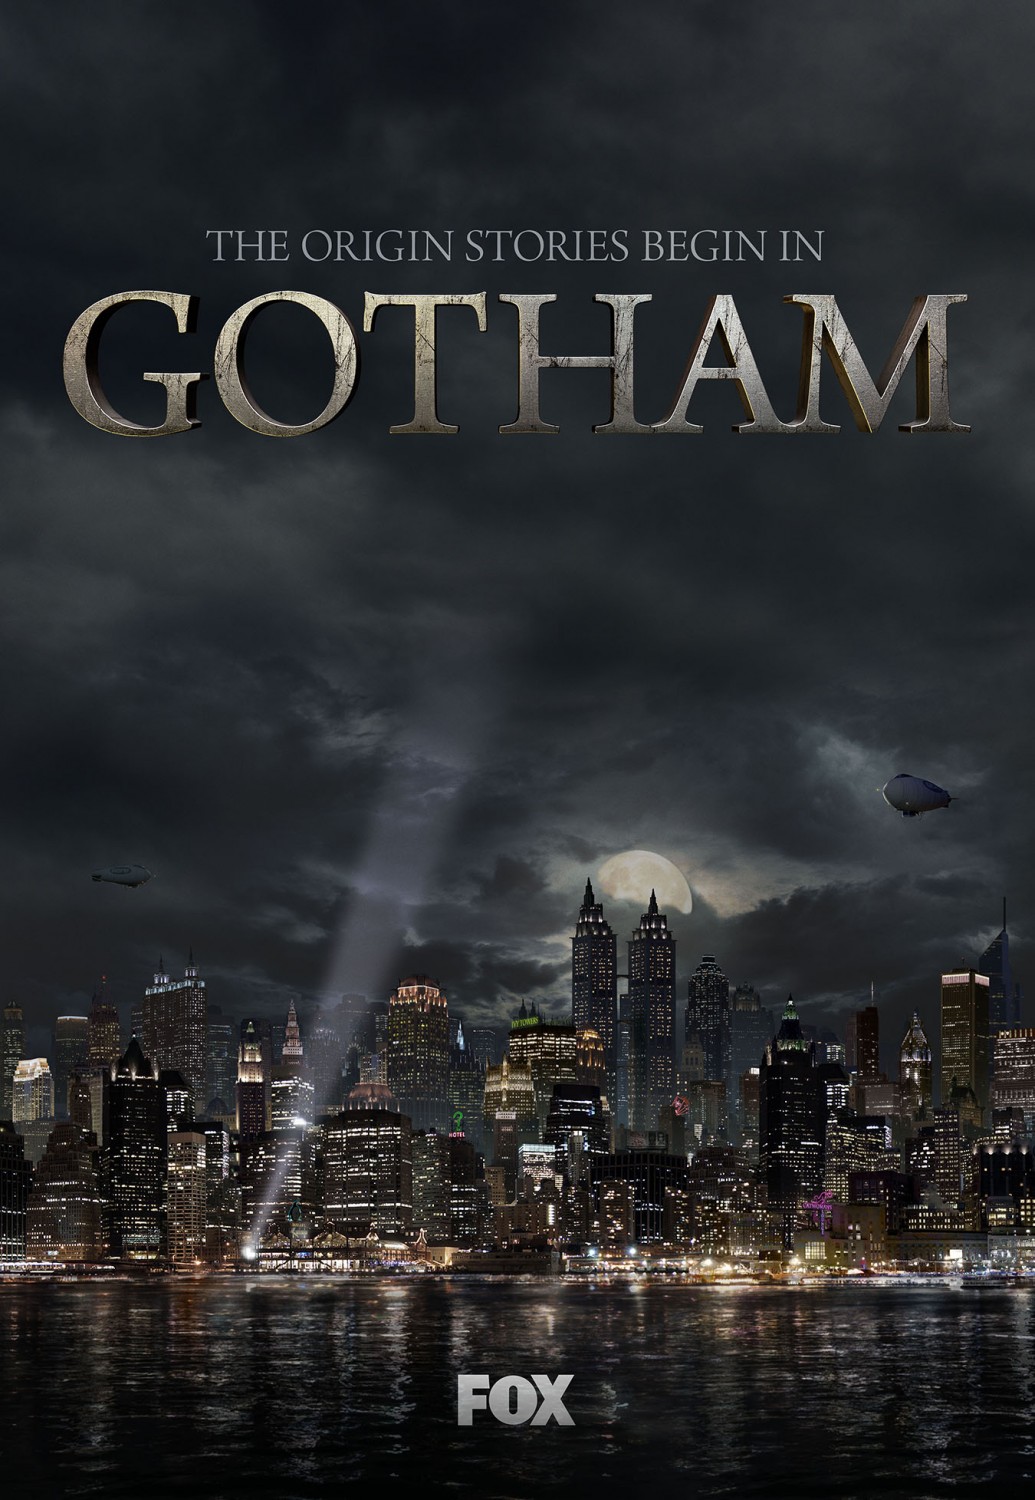 http://img4.wikia.nocookie.net/__cb20140909181441/marvel_dc/images/9/93/The_Origin_Stories_Begin_in_Gotham_Poster.jpg